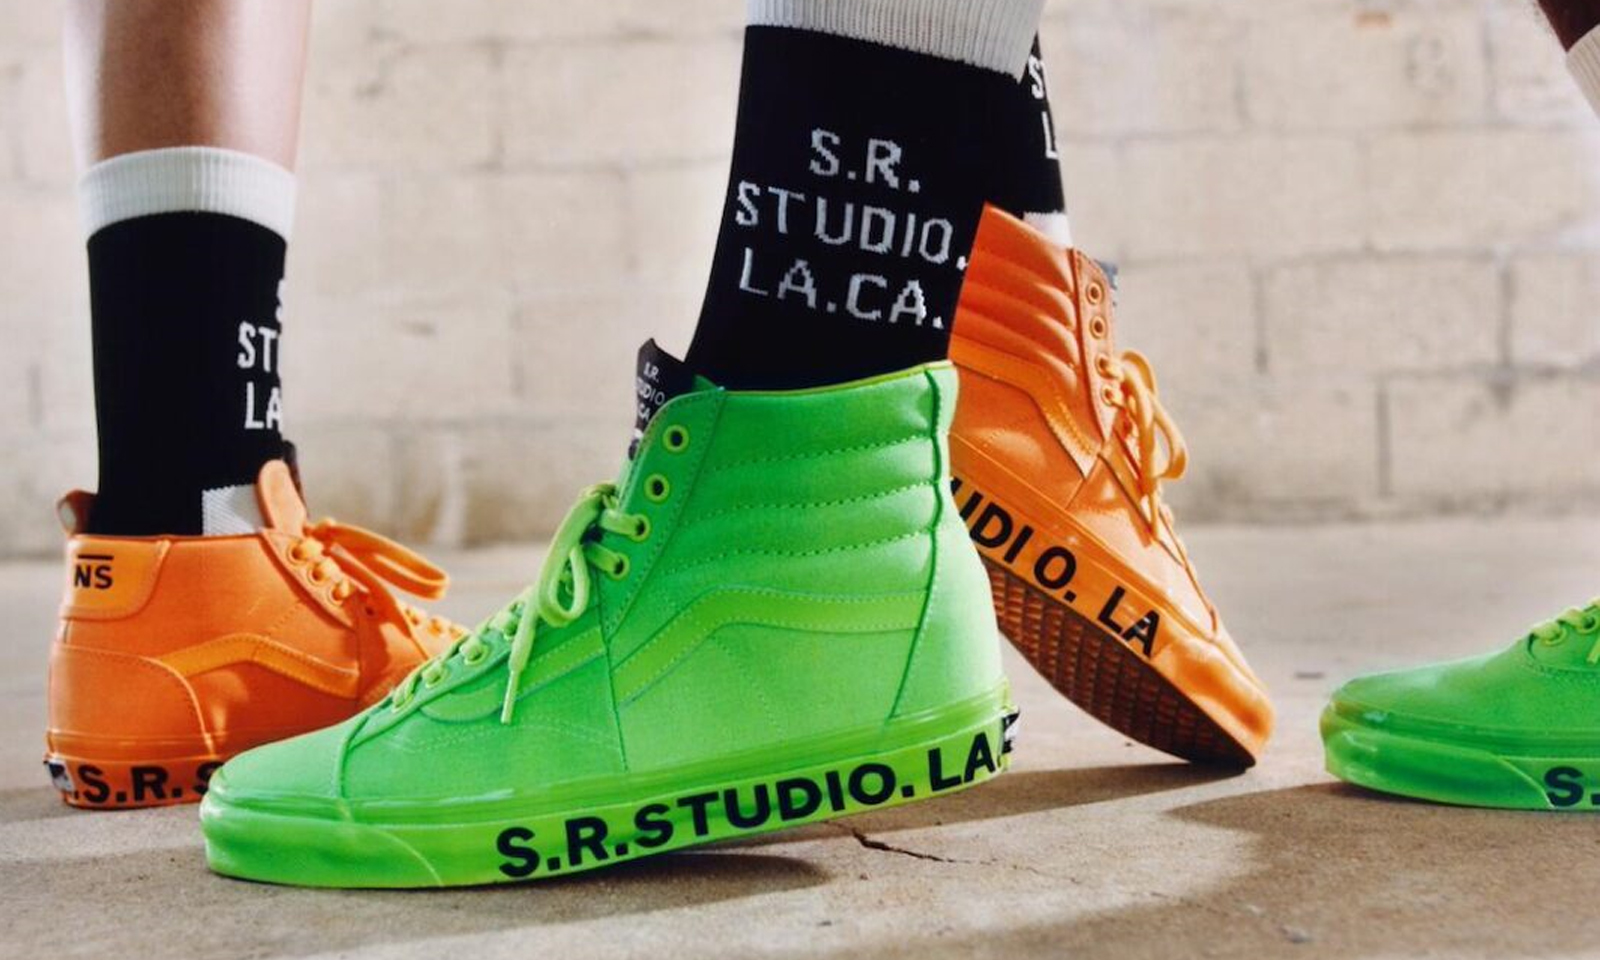 S.R. STUDIO. LA. CA. x VANS 合作鞋款来袭